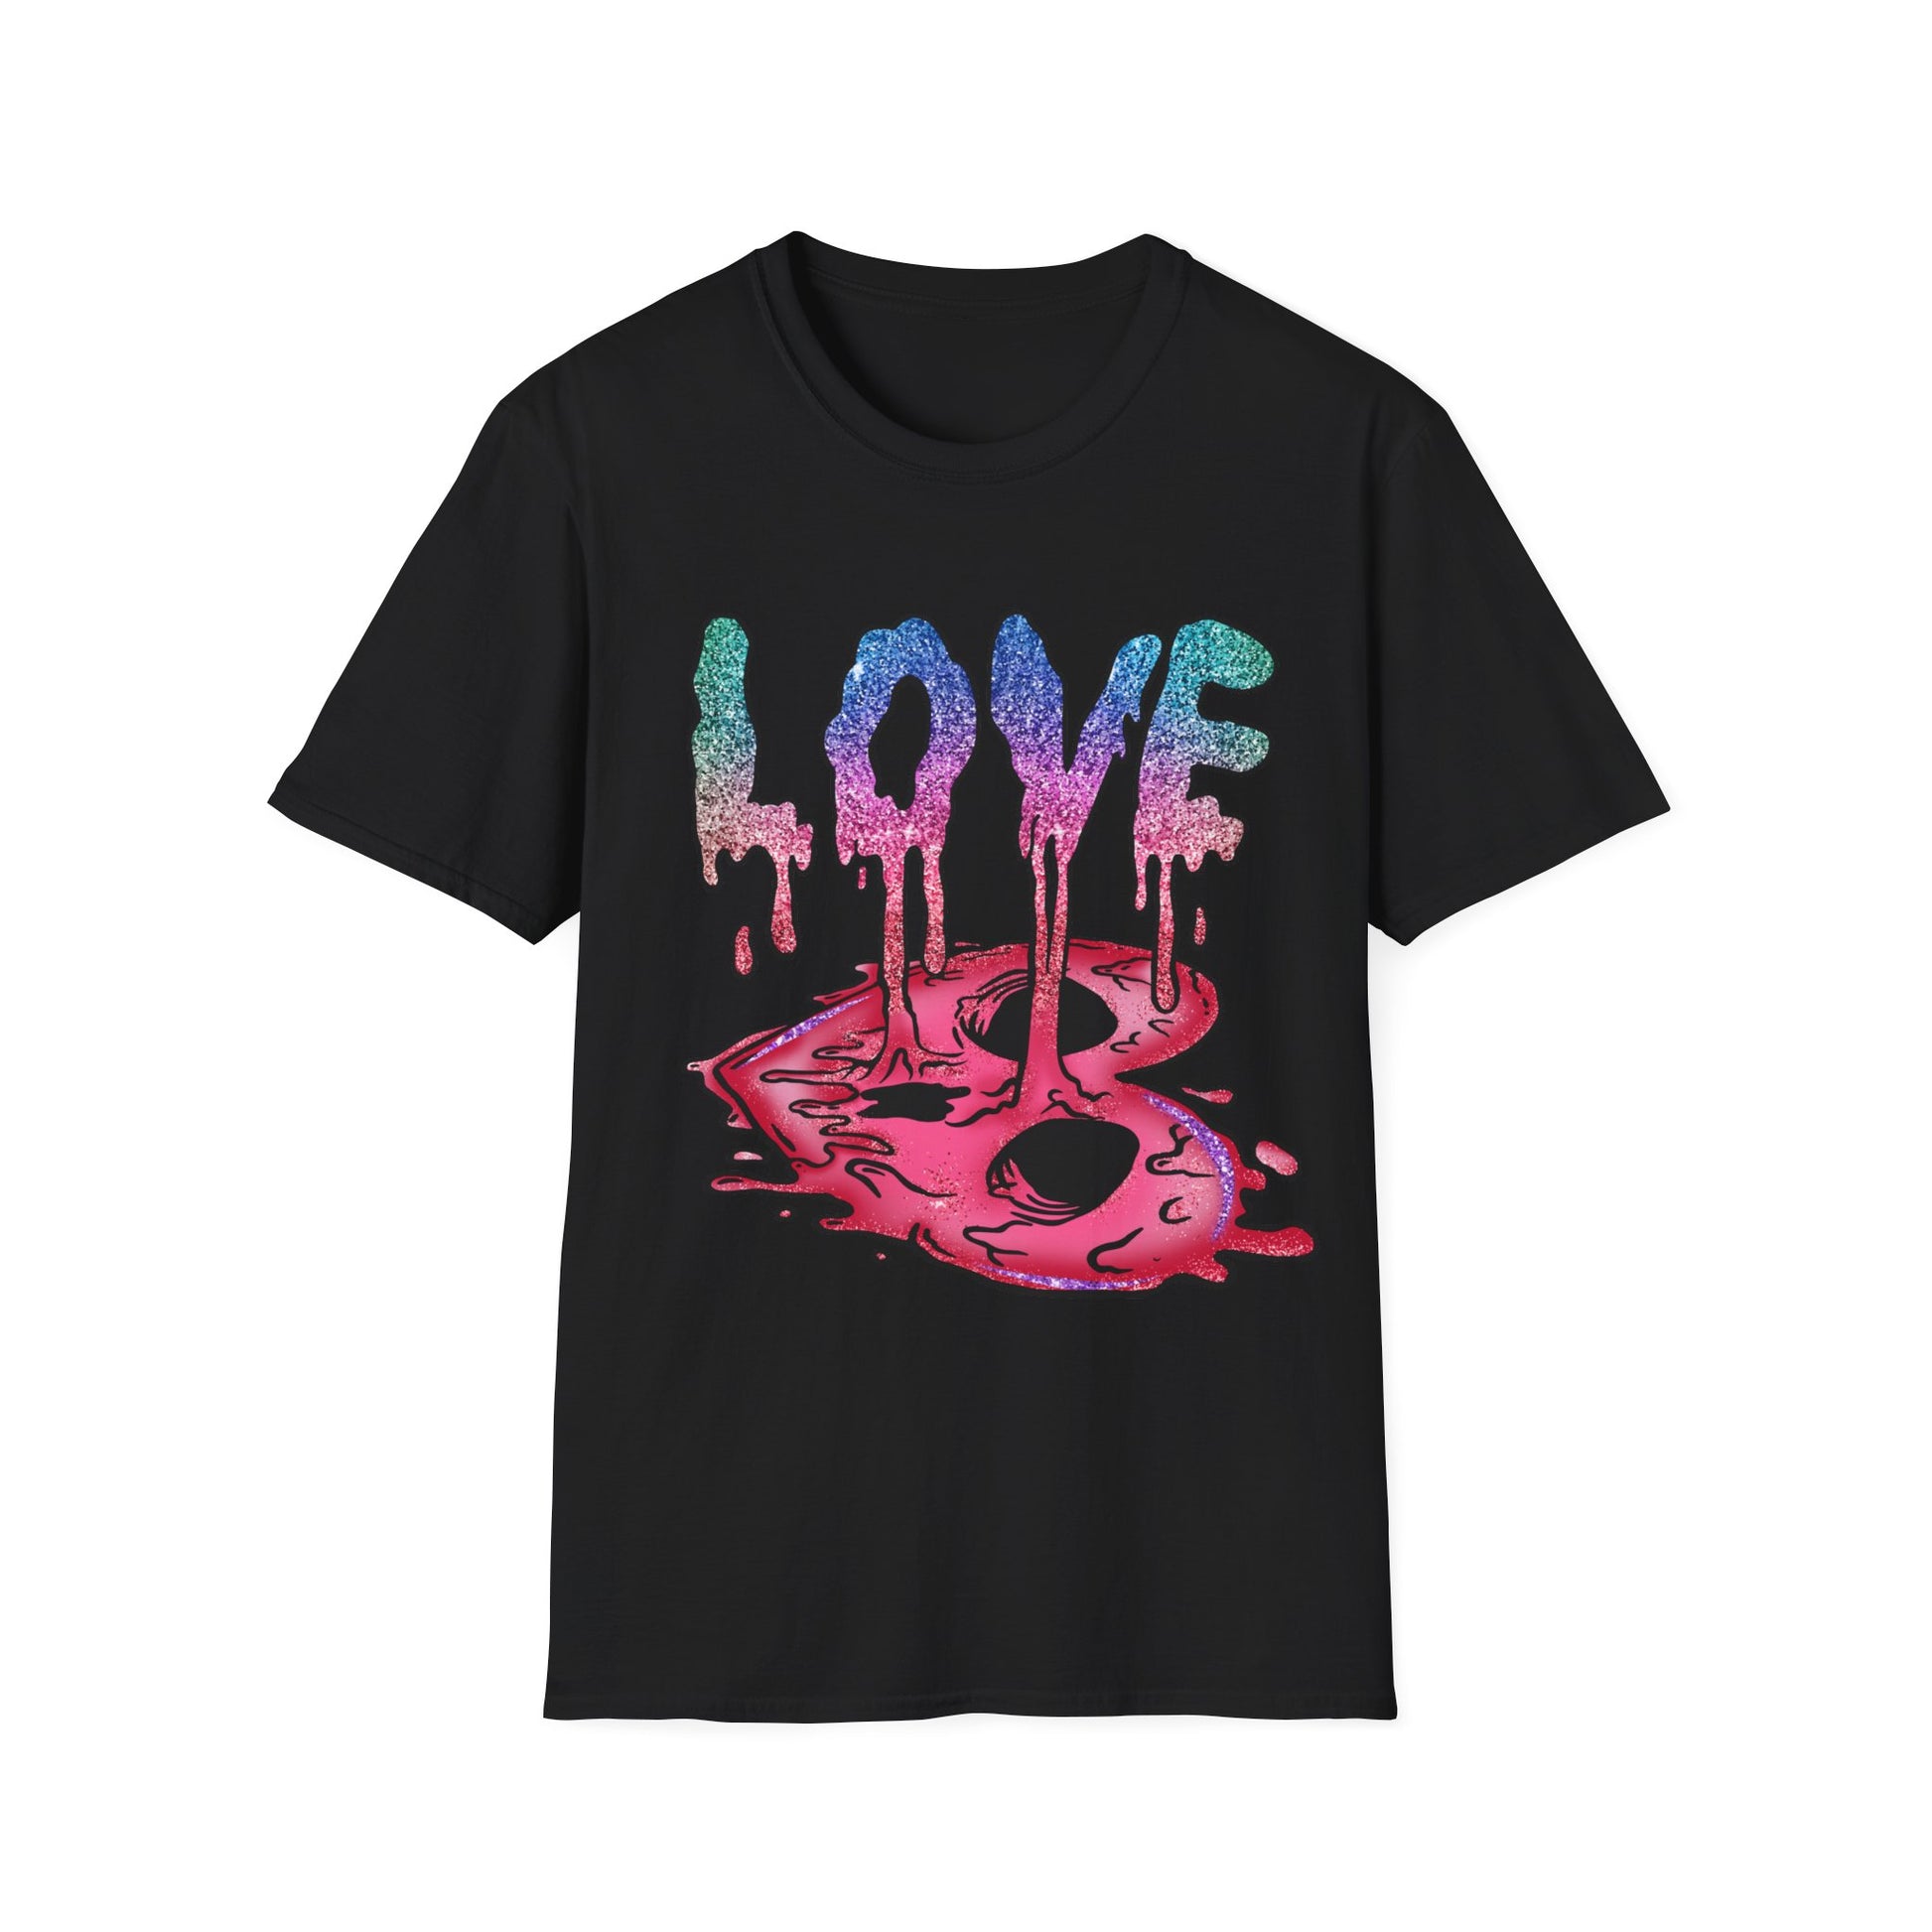 Love gothic graphic tee, goth clothing valentine shirt